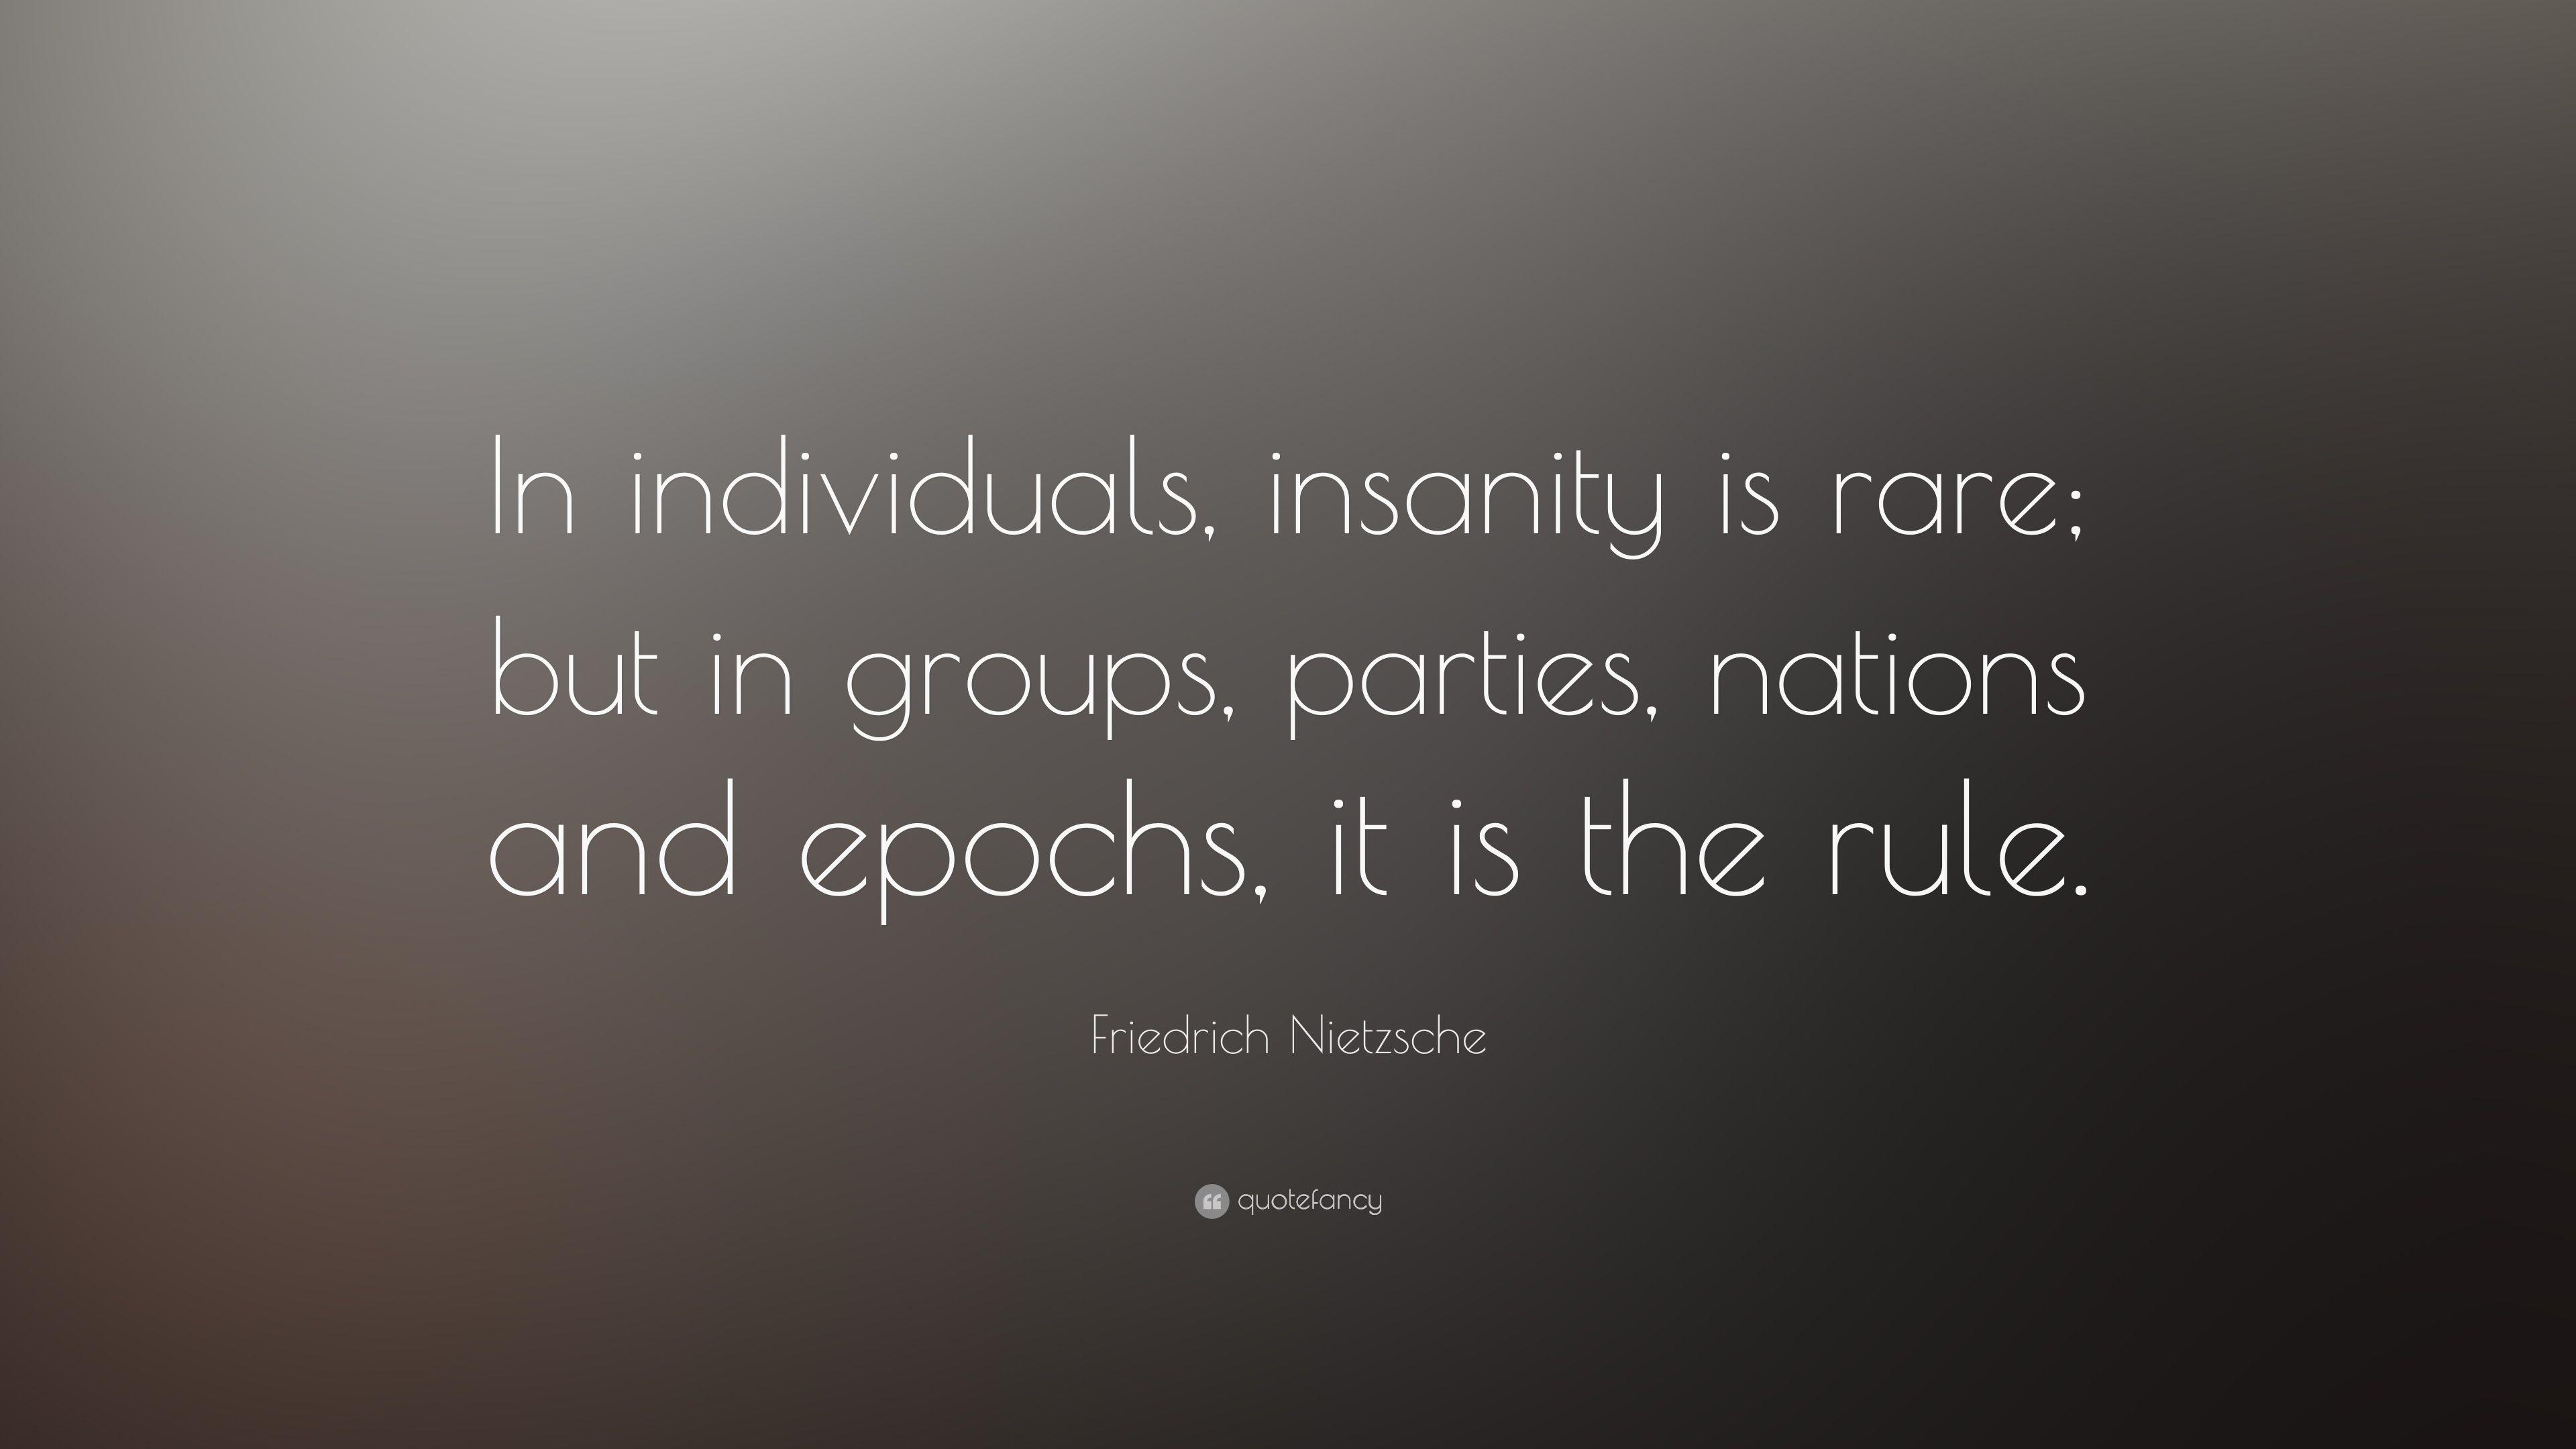 Friedrich Nietzsche Quote: “In individuals, insanity is rare; but